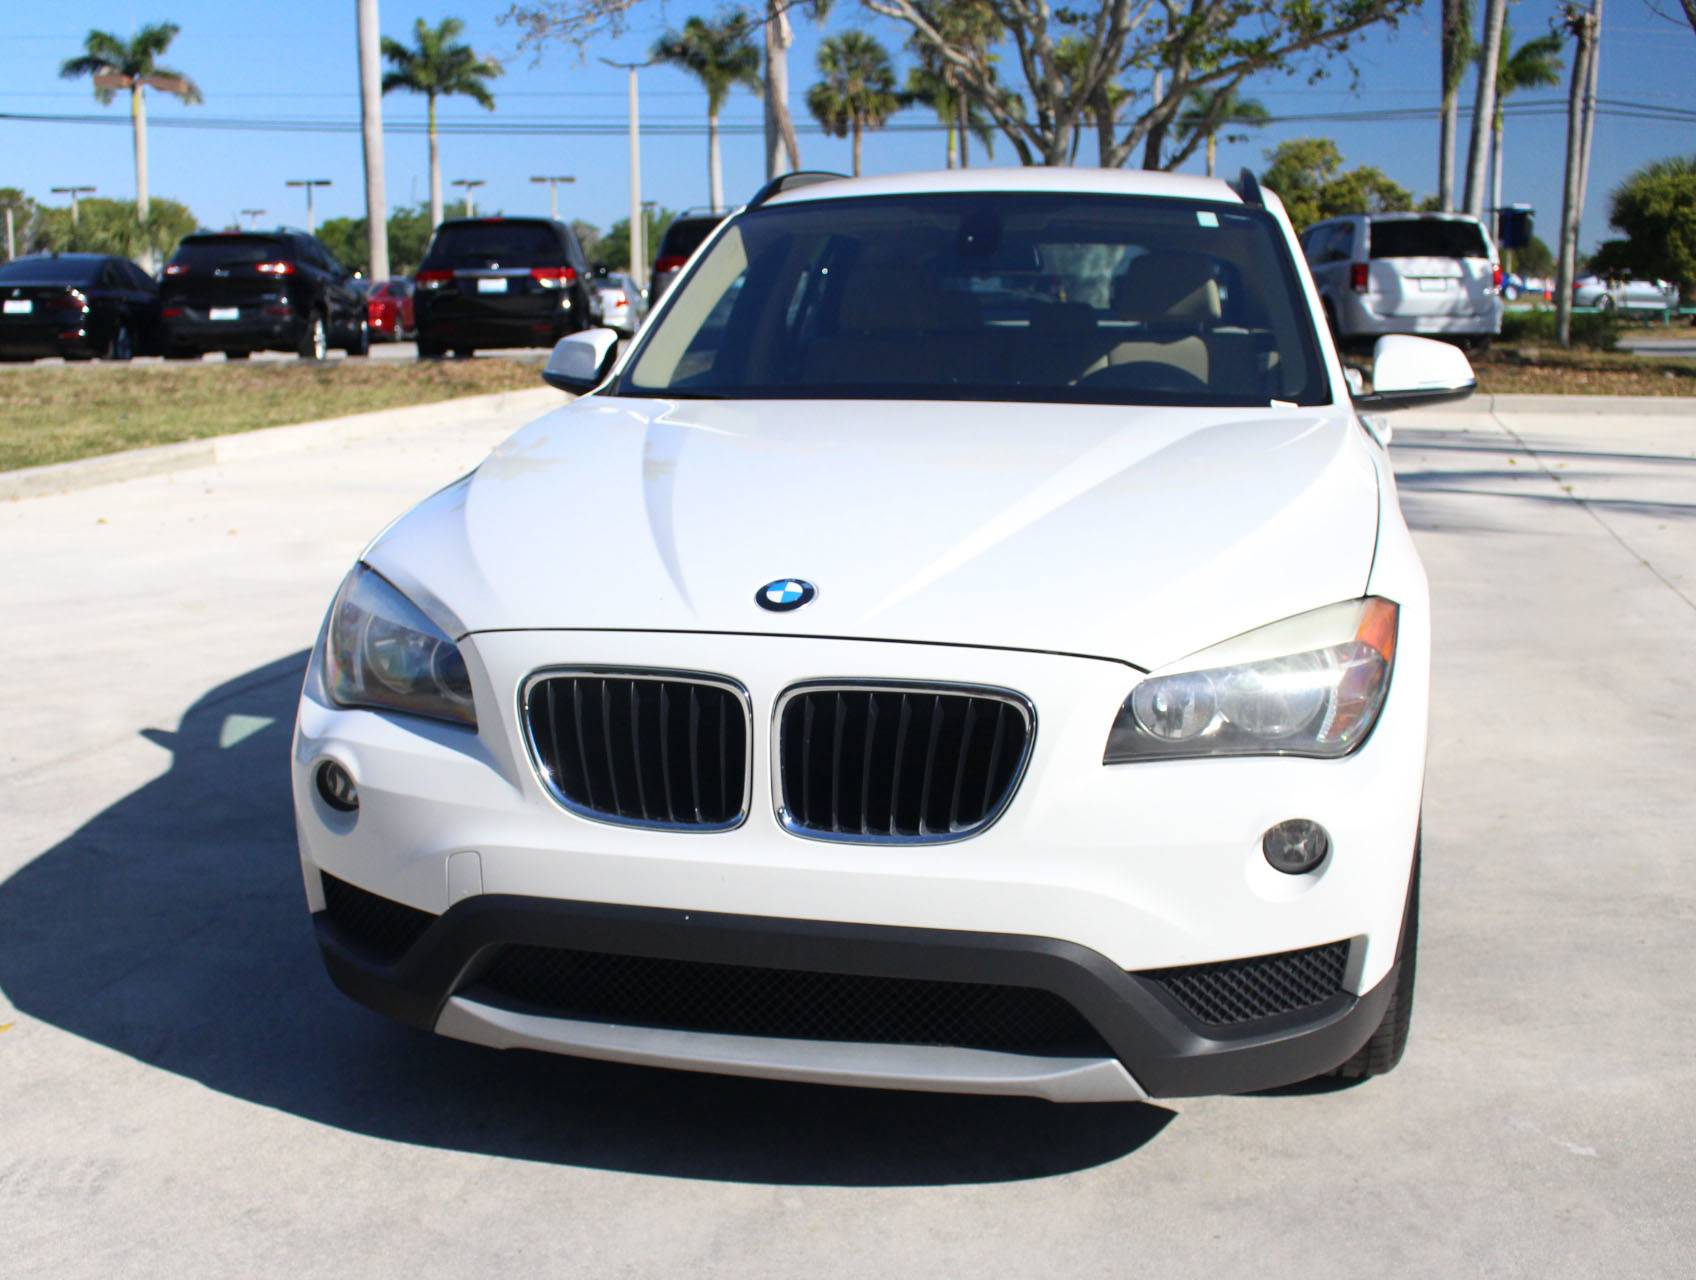 Florida Fine Cars - Used BMW X1 2014 MARGATE SDRIVE28I